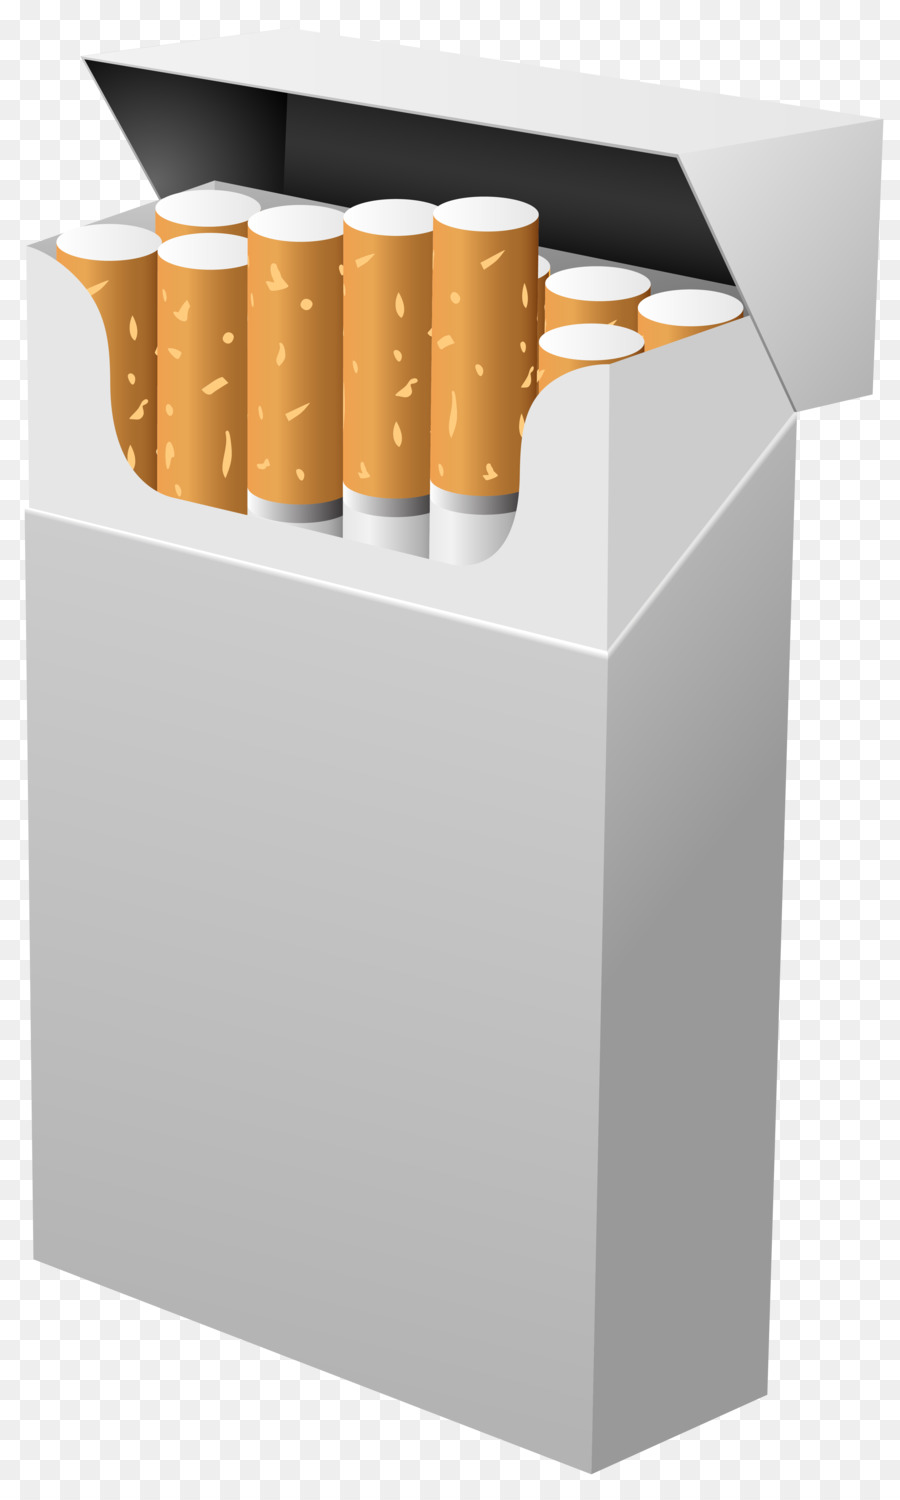 Morley Cigarette Pack PNG Ima